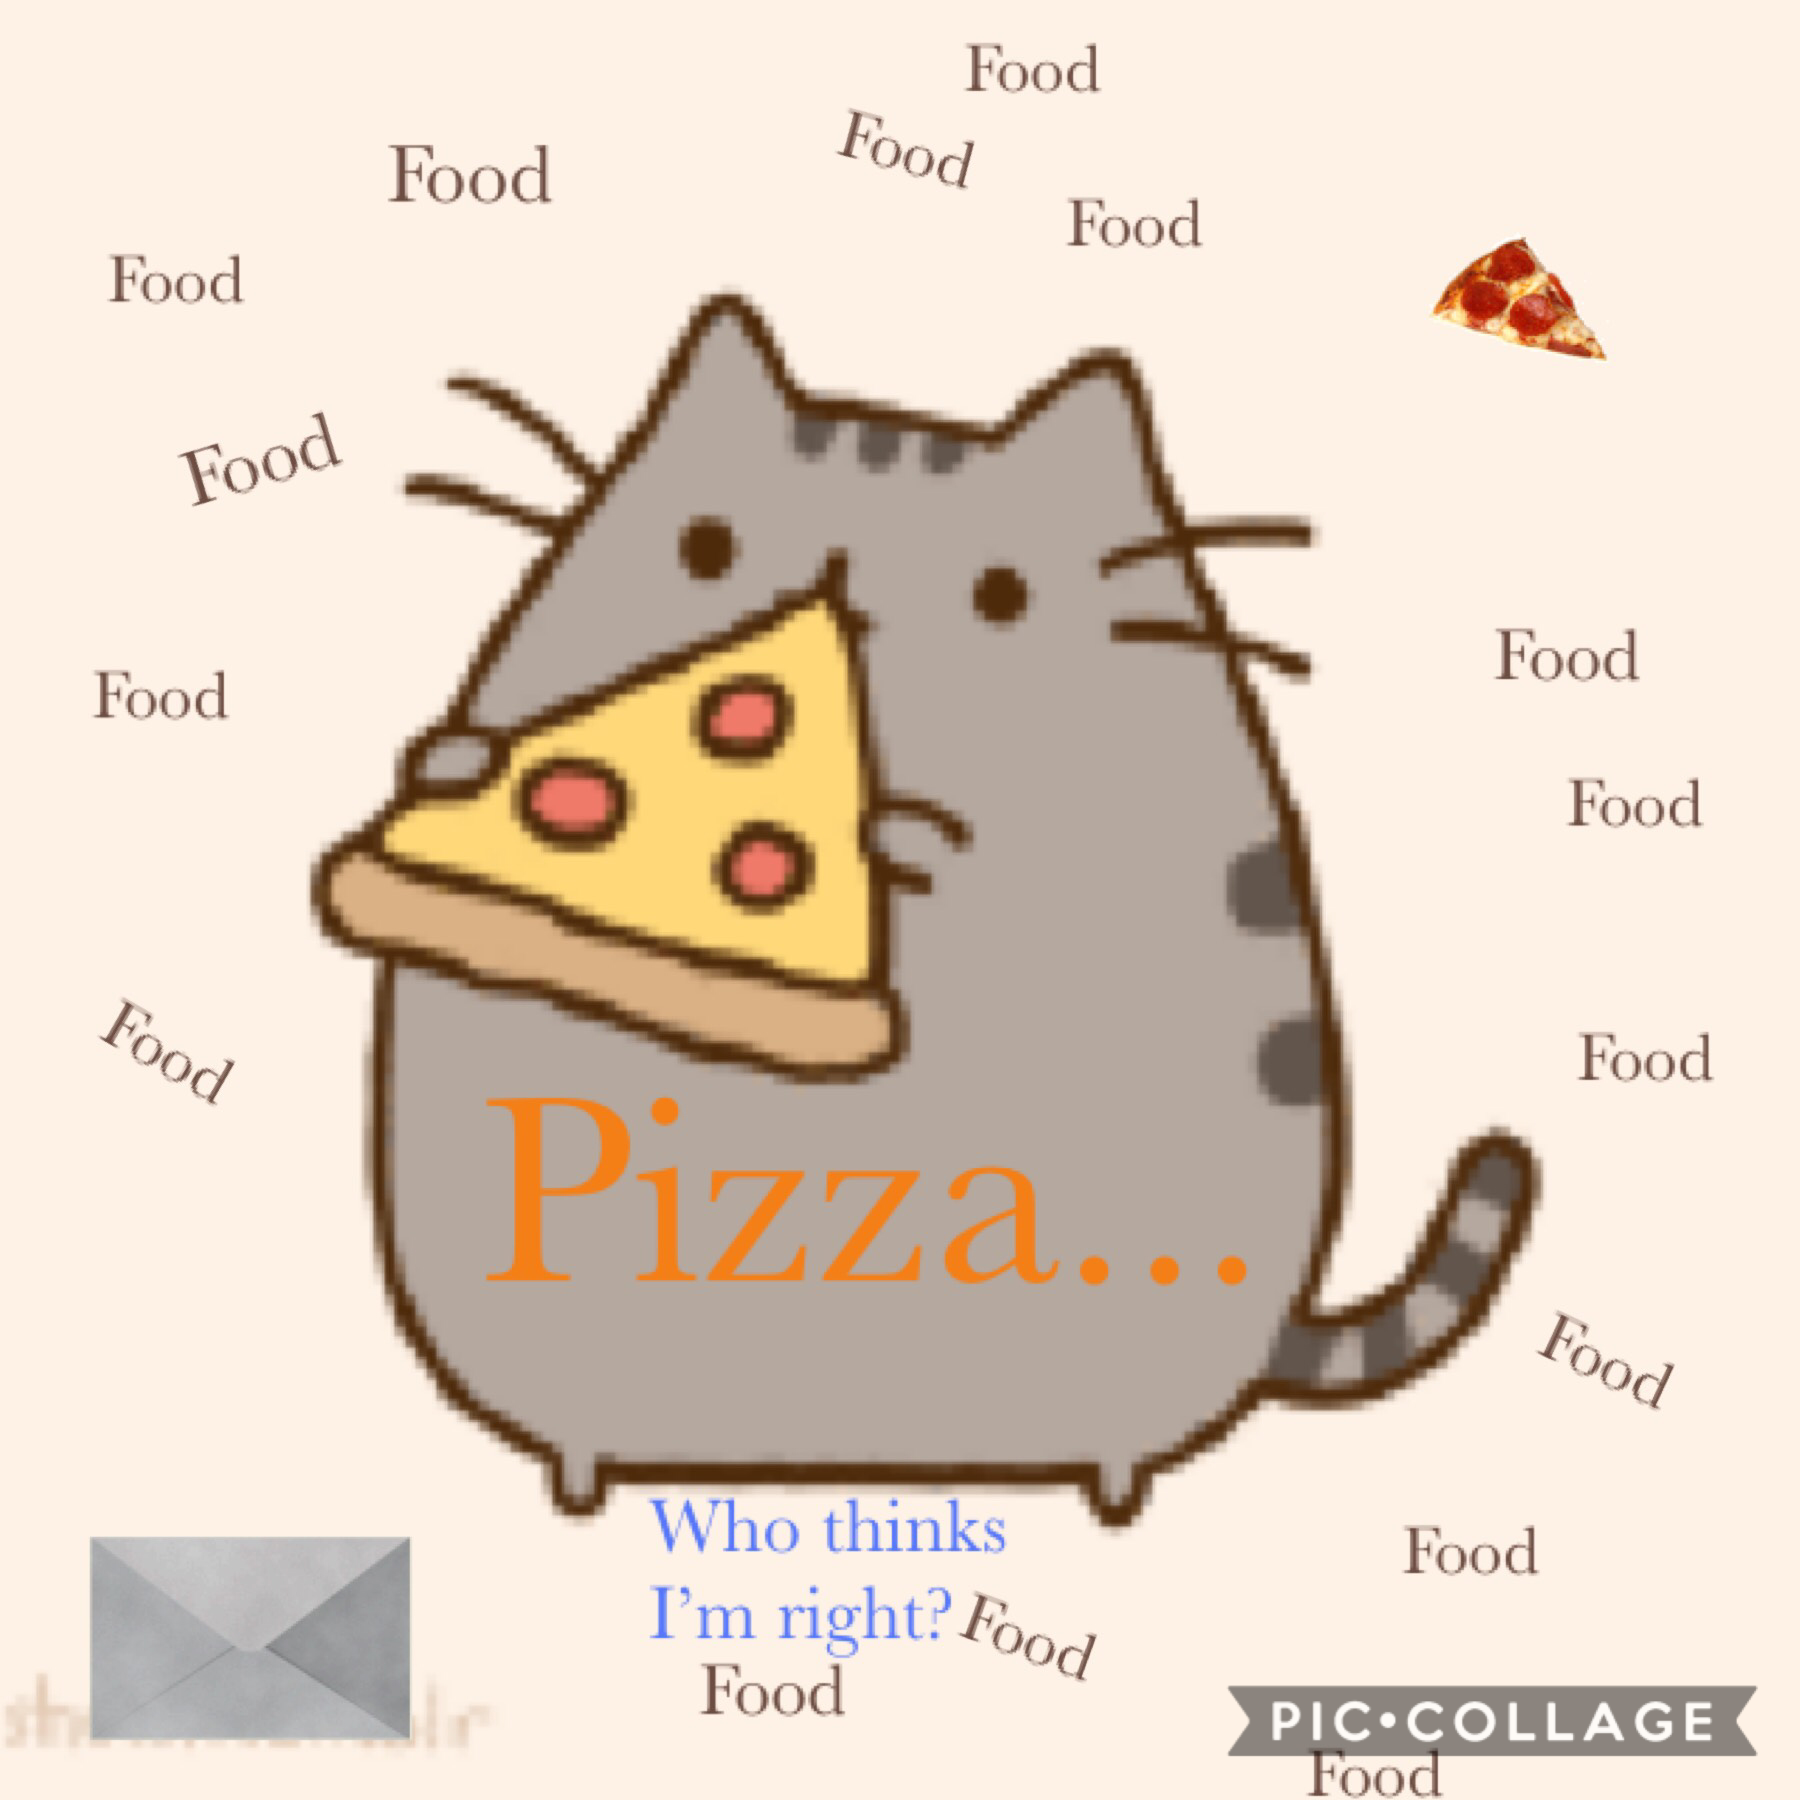 Food? PIZZA!! YUMMY!